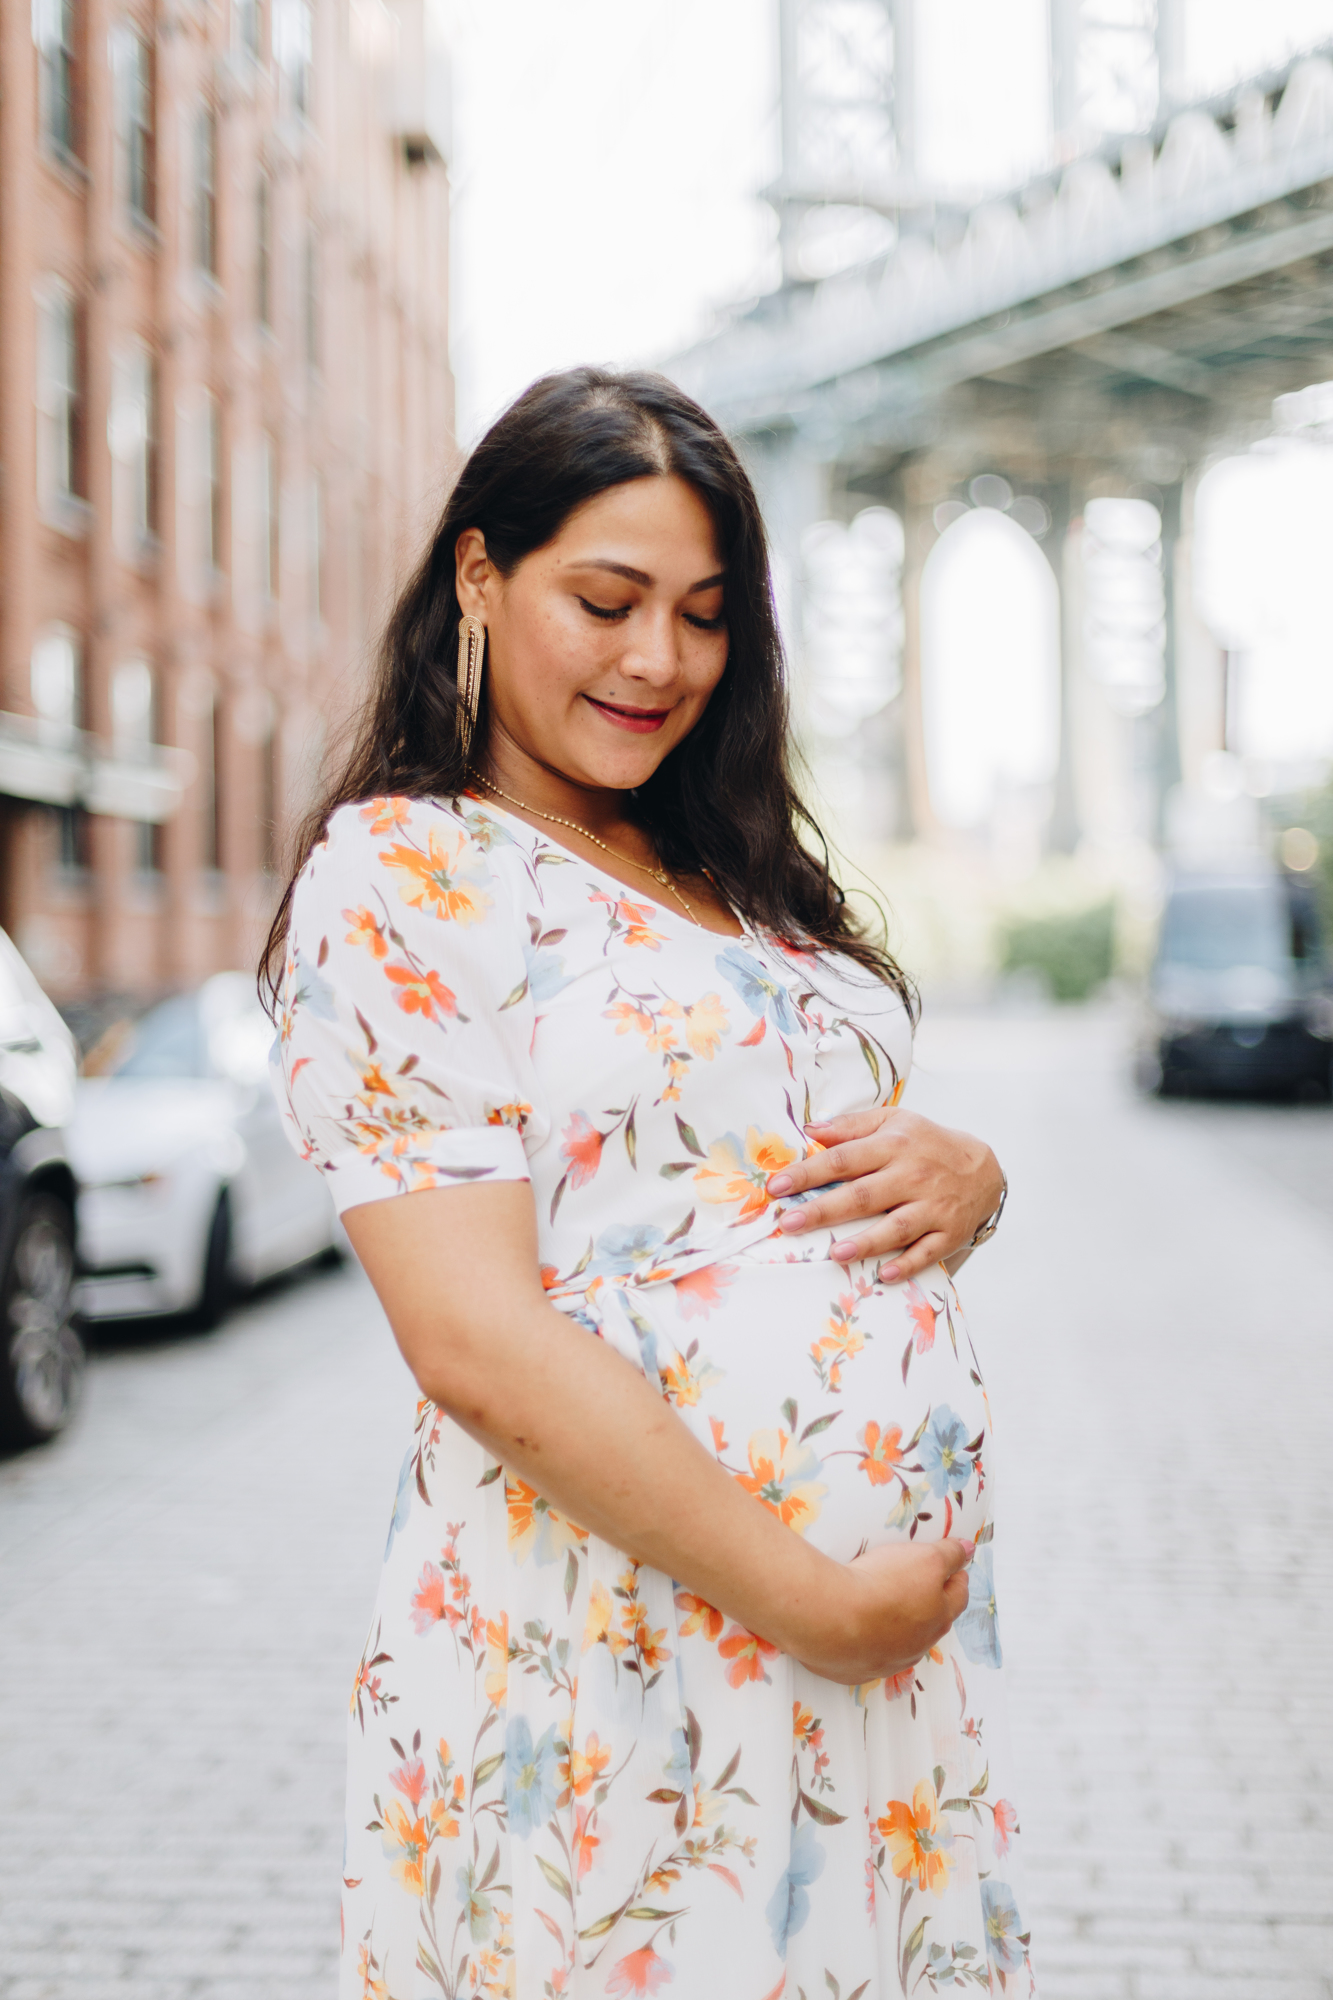 Incredible Brooklyn Bridge Maternity Photos